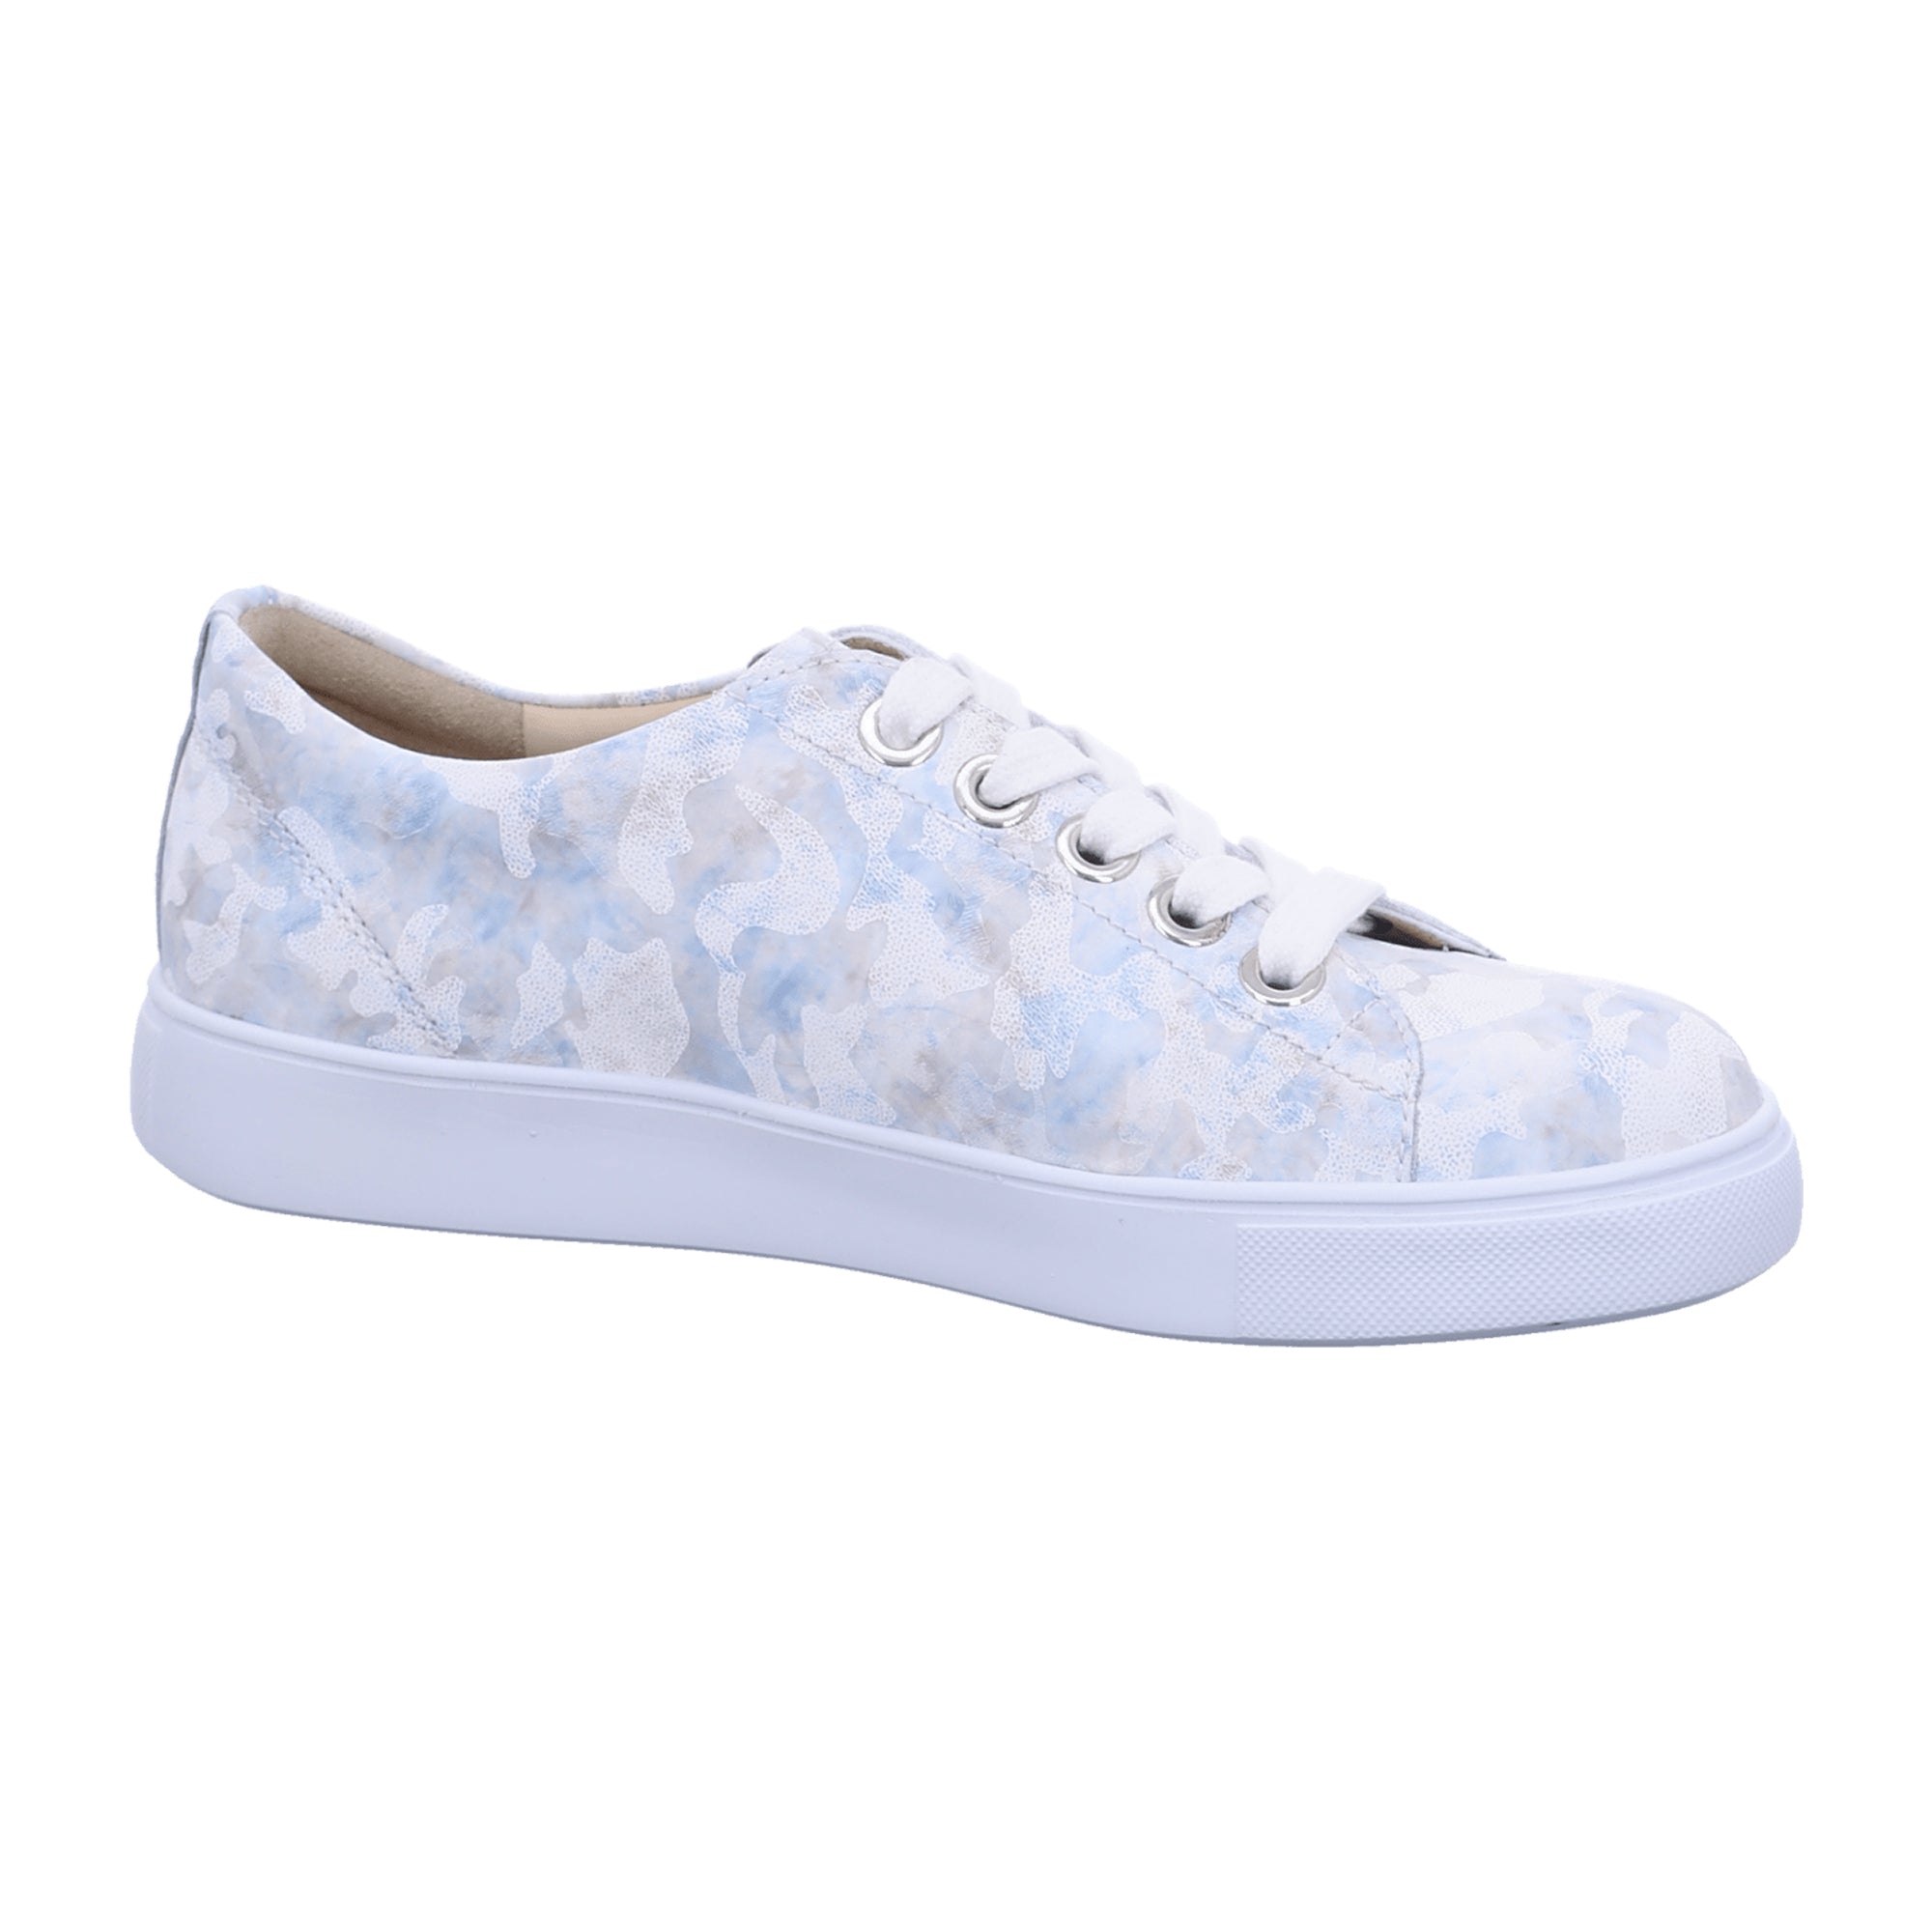 Finn Comfort Elpaso Women's White Sneakers - Stylish & Comfortable